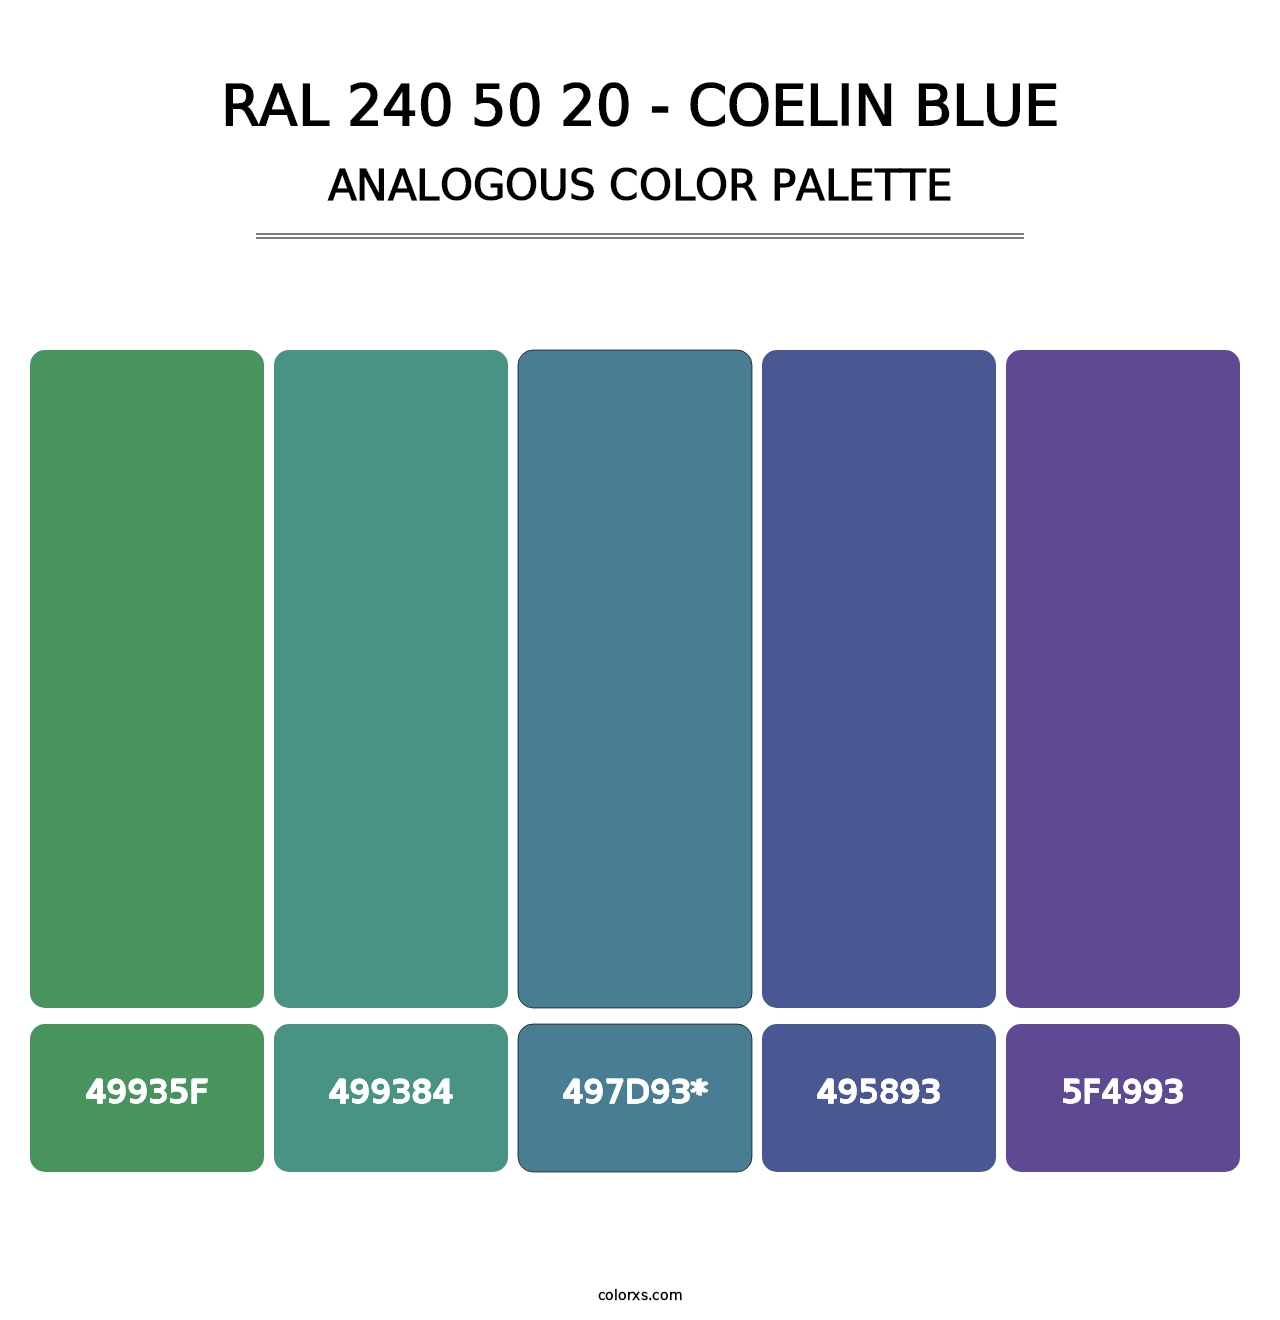 RAL 240 50 20 - Coelin Blue - Analogous Color Palette